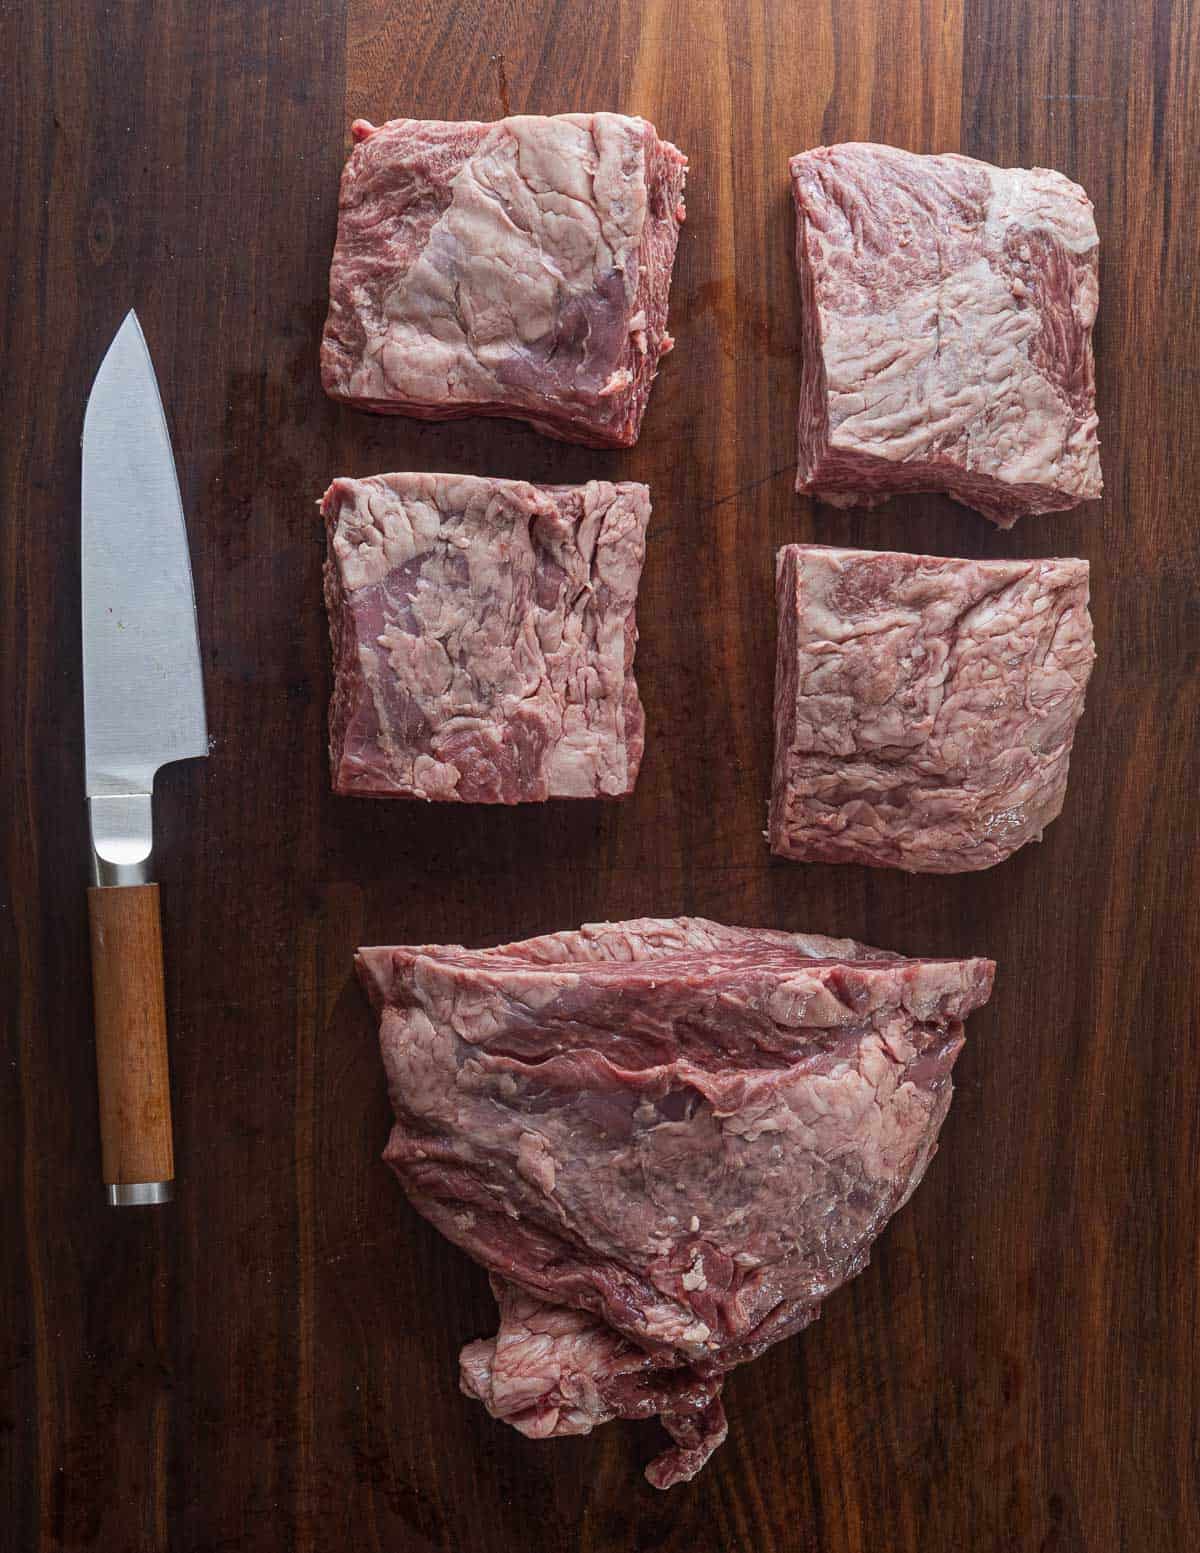 A whole bavette steak cut into 5 portions.